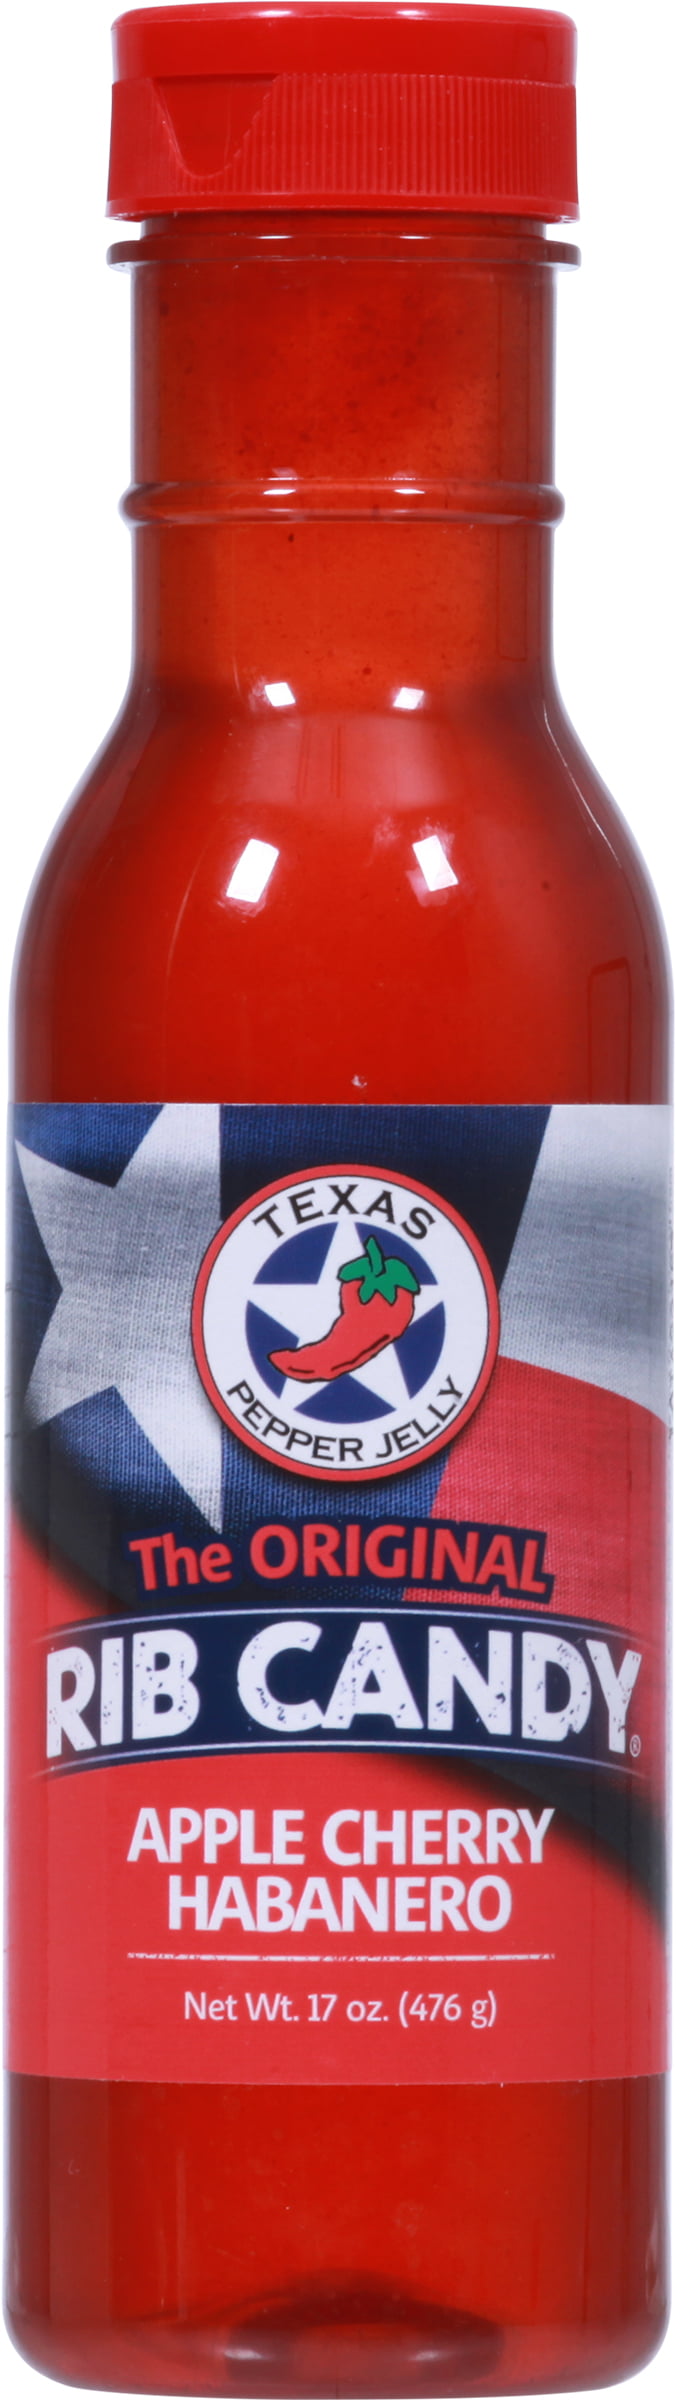 Texas Pepper Jelly Apple Cherry Sweet Rib Candy